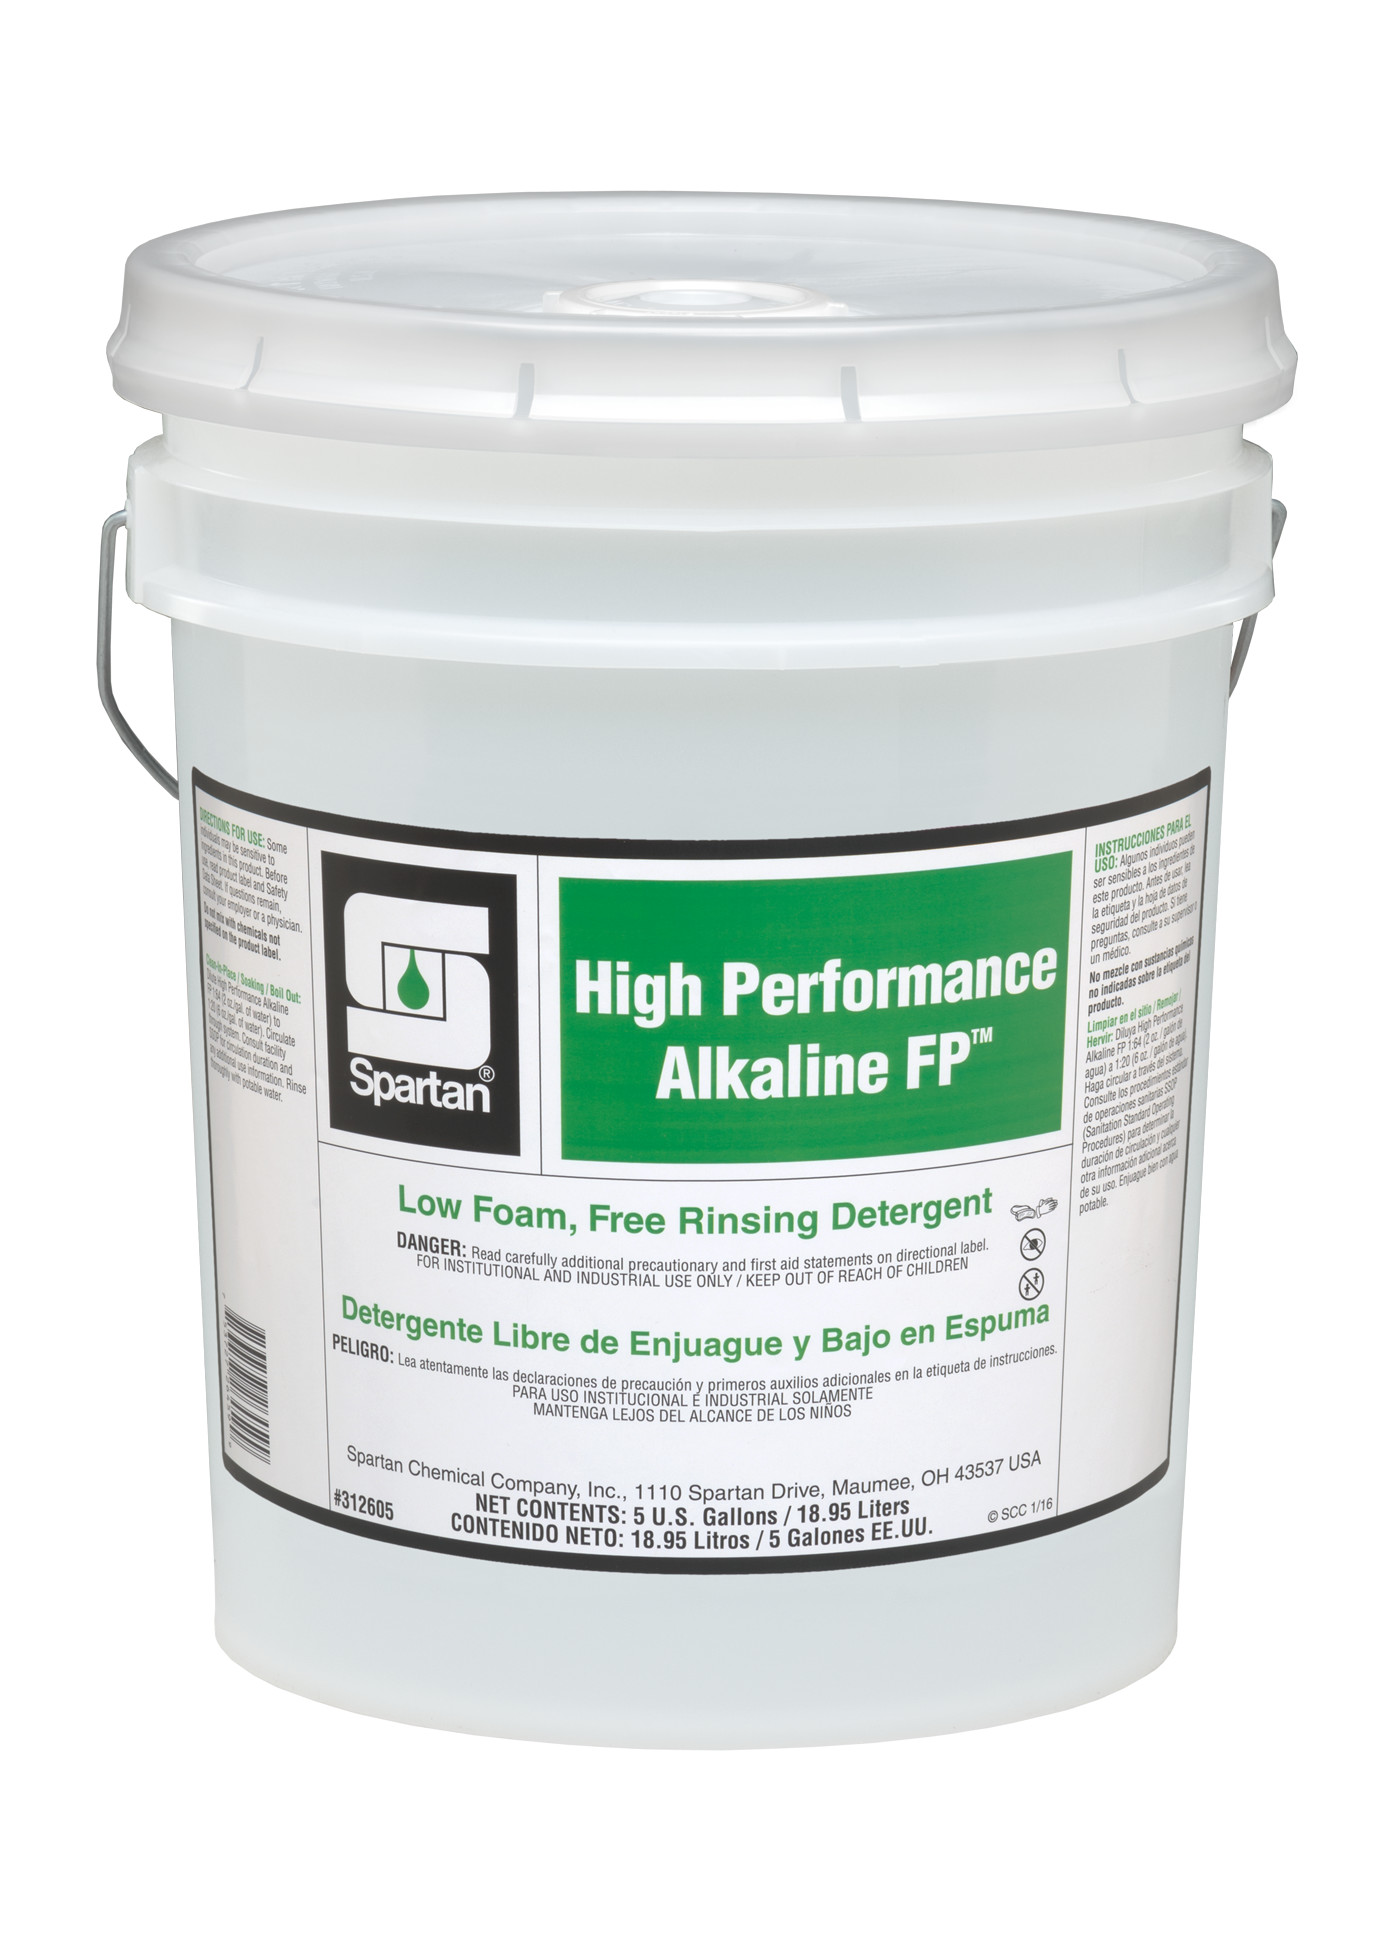 Spartan Chemical Company High Performance Alkaline FP, 5 GAL PAIL